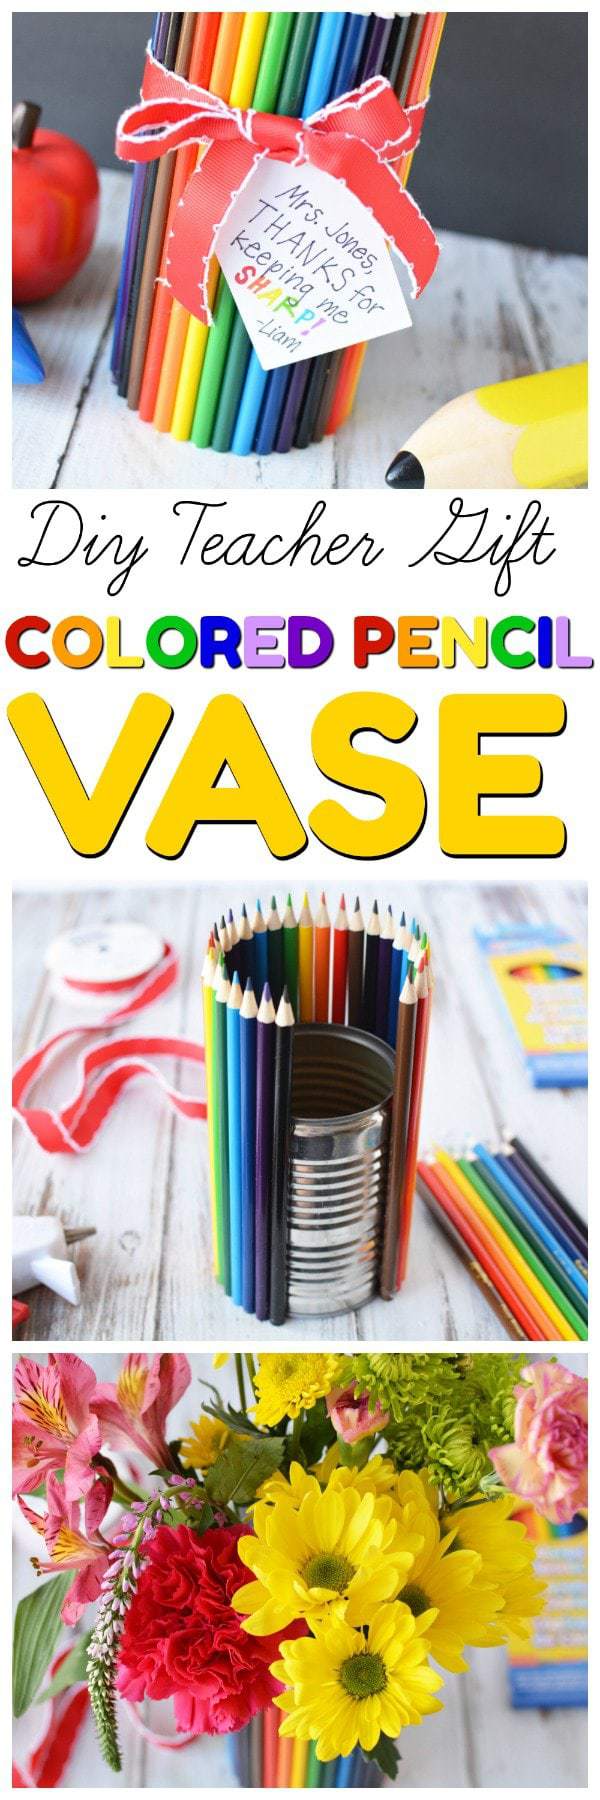 colored-pencil-vase-teacher-gift